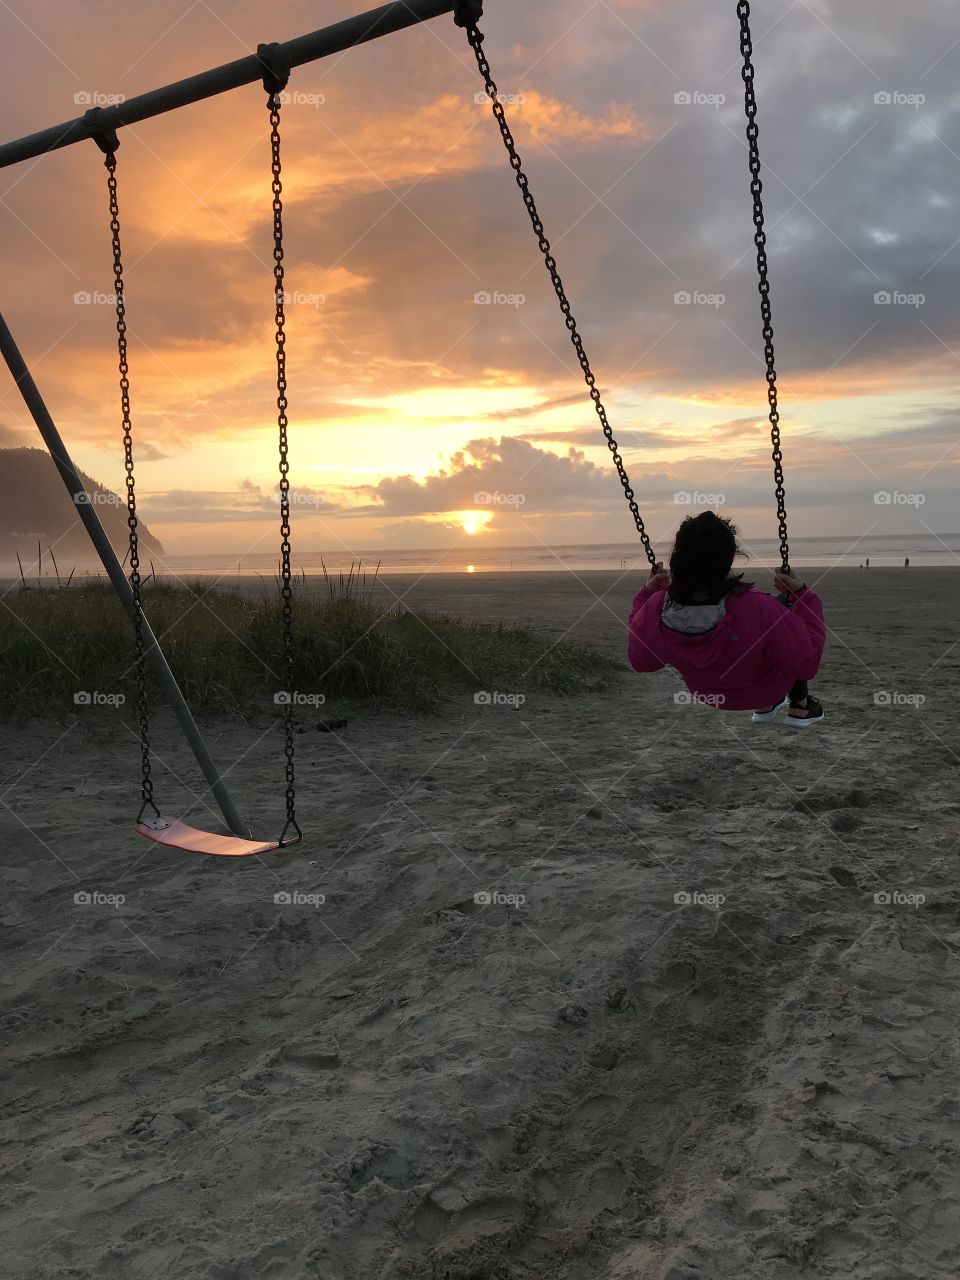 Beach swings 